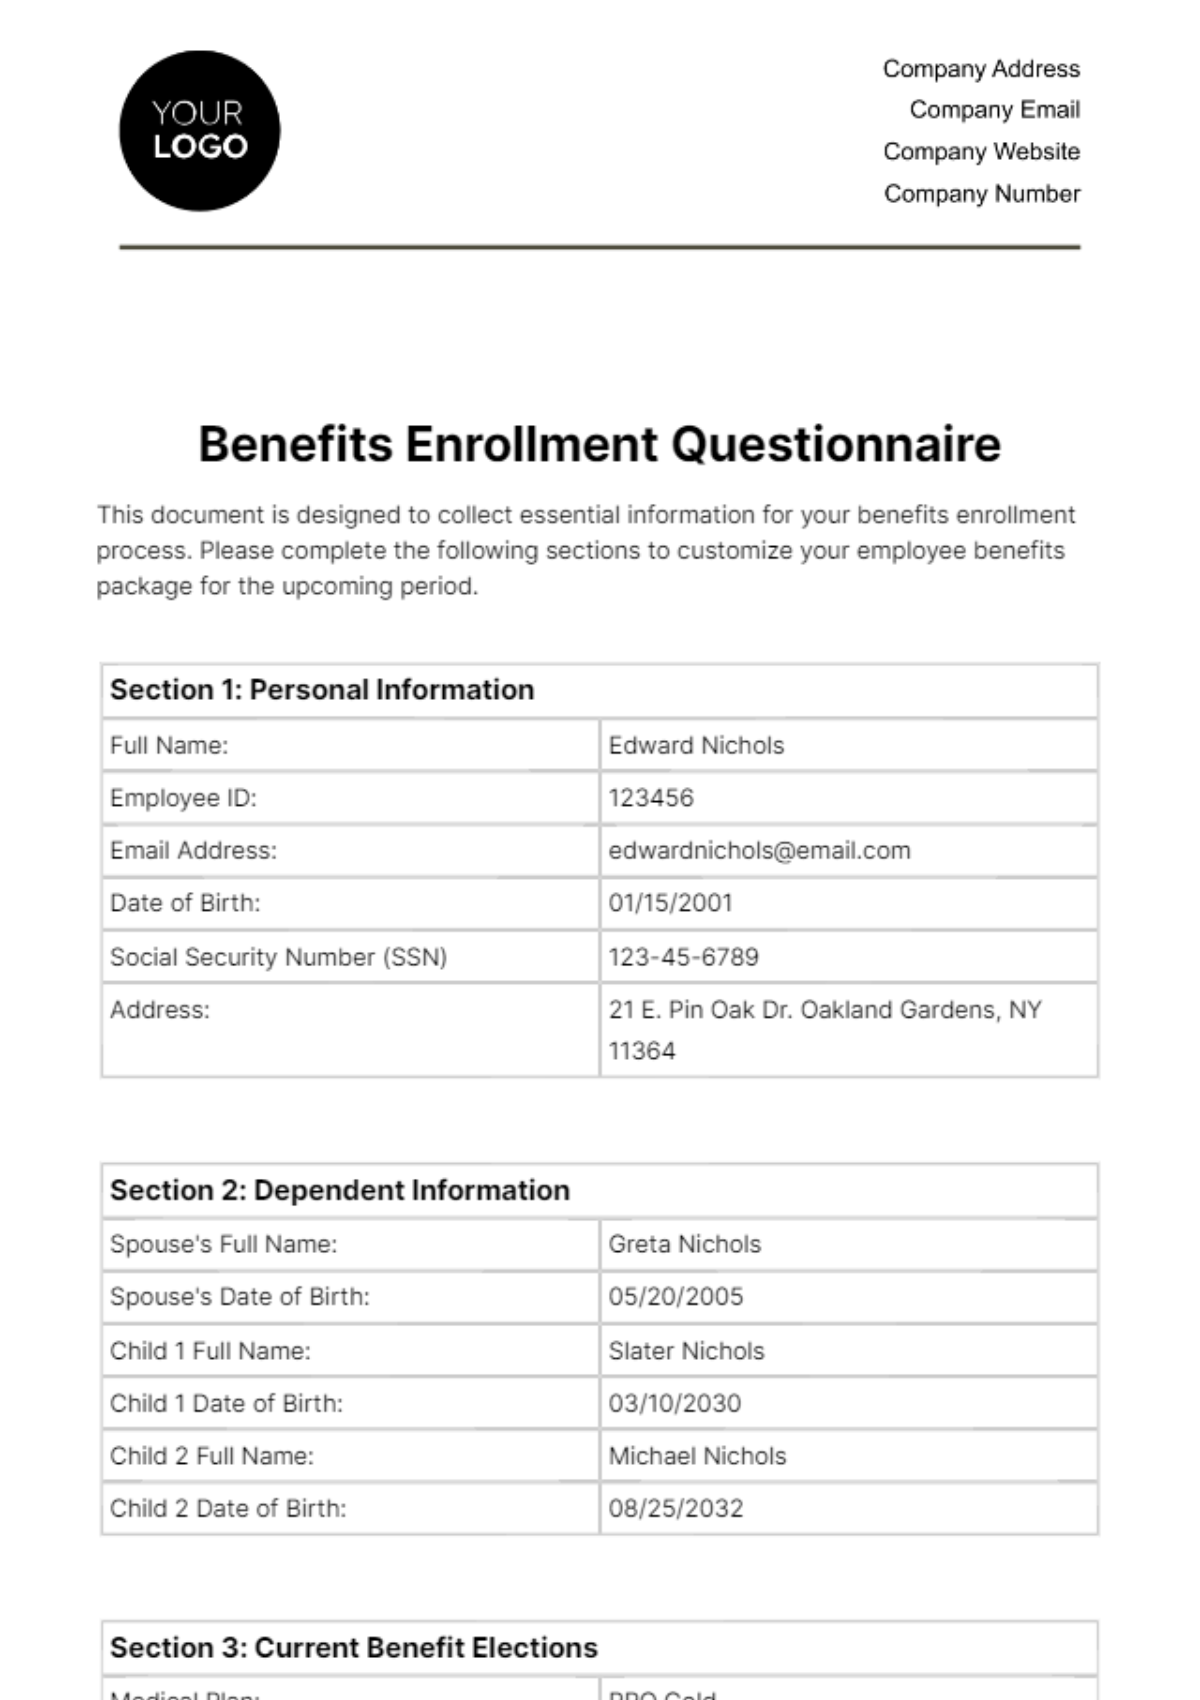 Benefits Enrollment Questionnaire HR Template